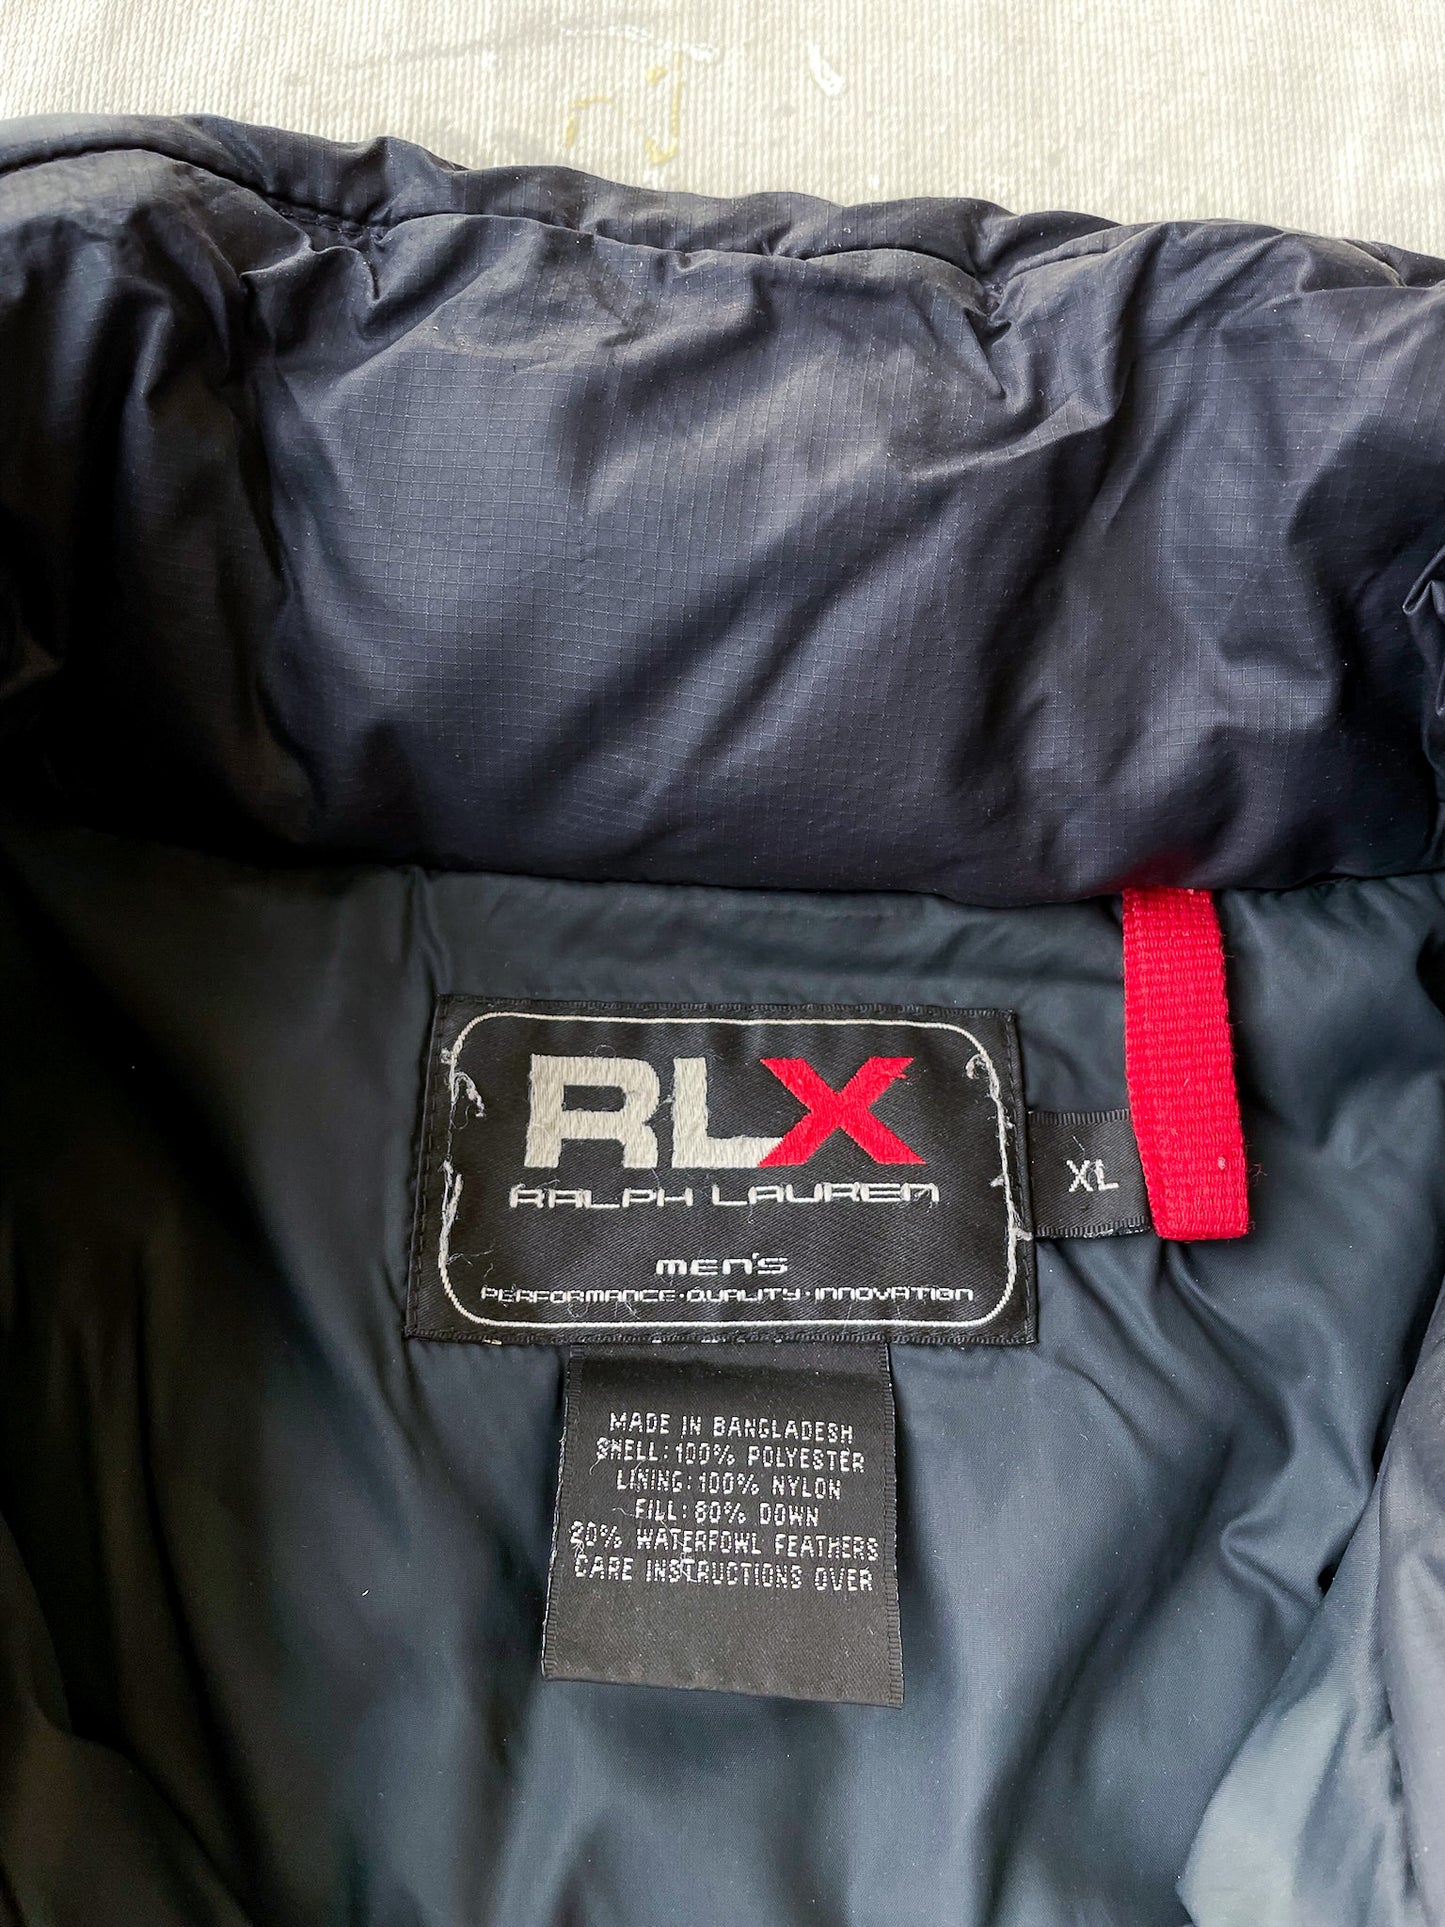 Polo RLX Goose Down Puffy Jacket—[XL]